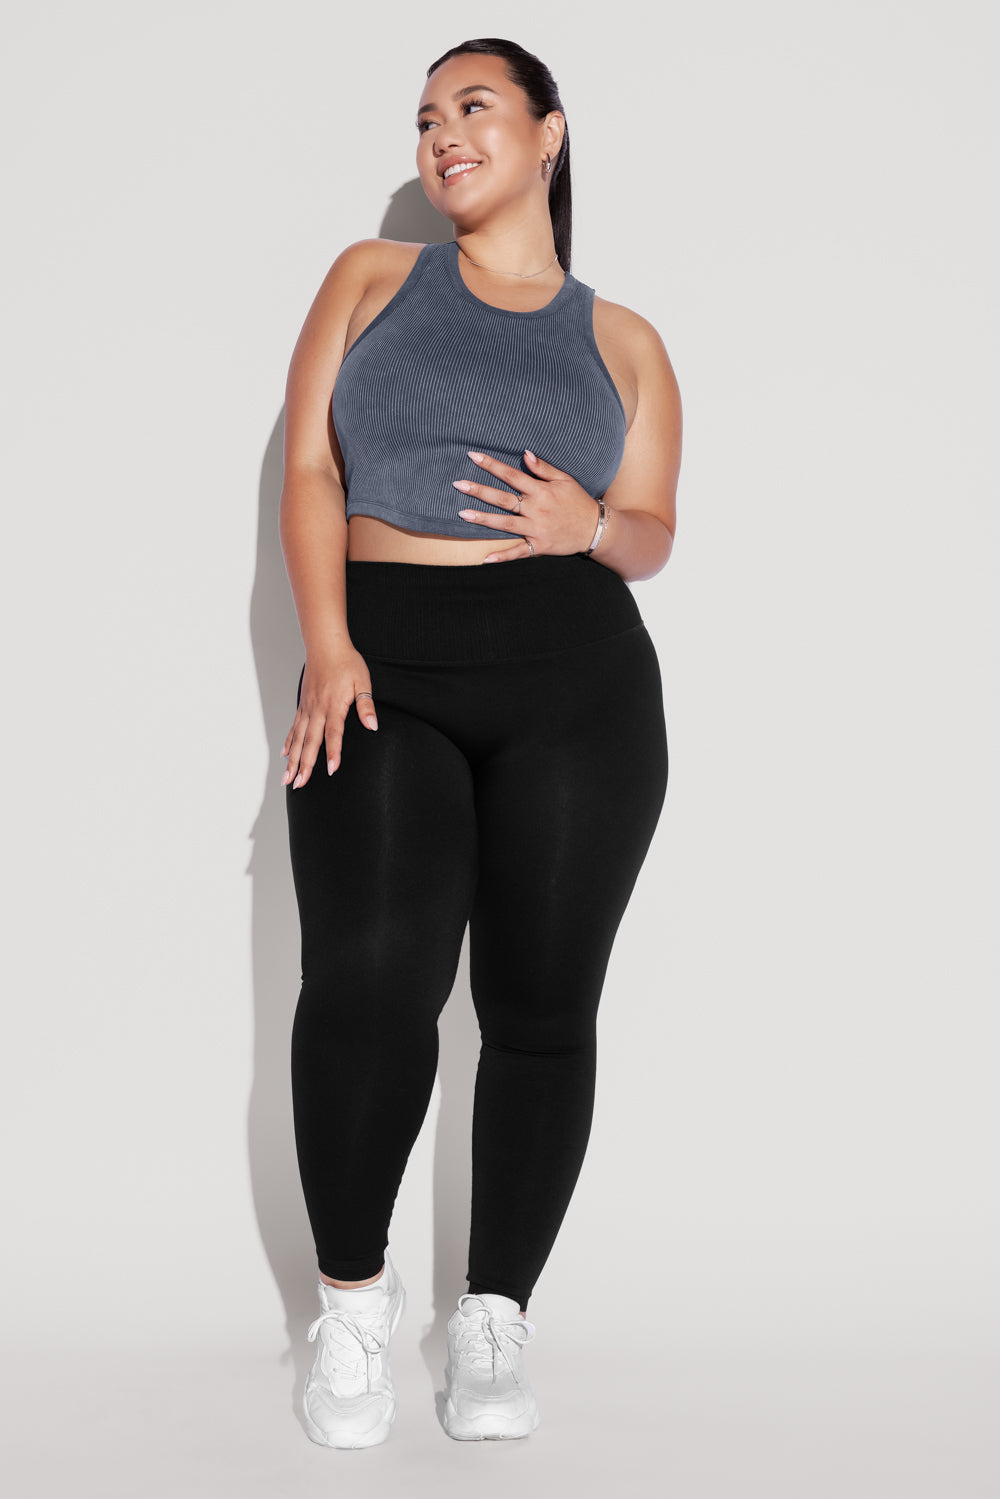 Pop Fit Stella Floral Plus Size Workout Yoga Leggings Pockets 3X